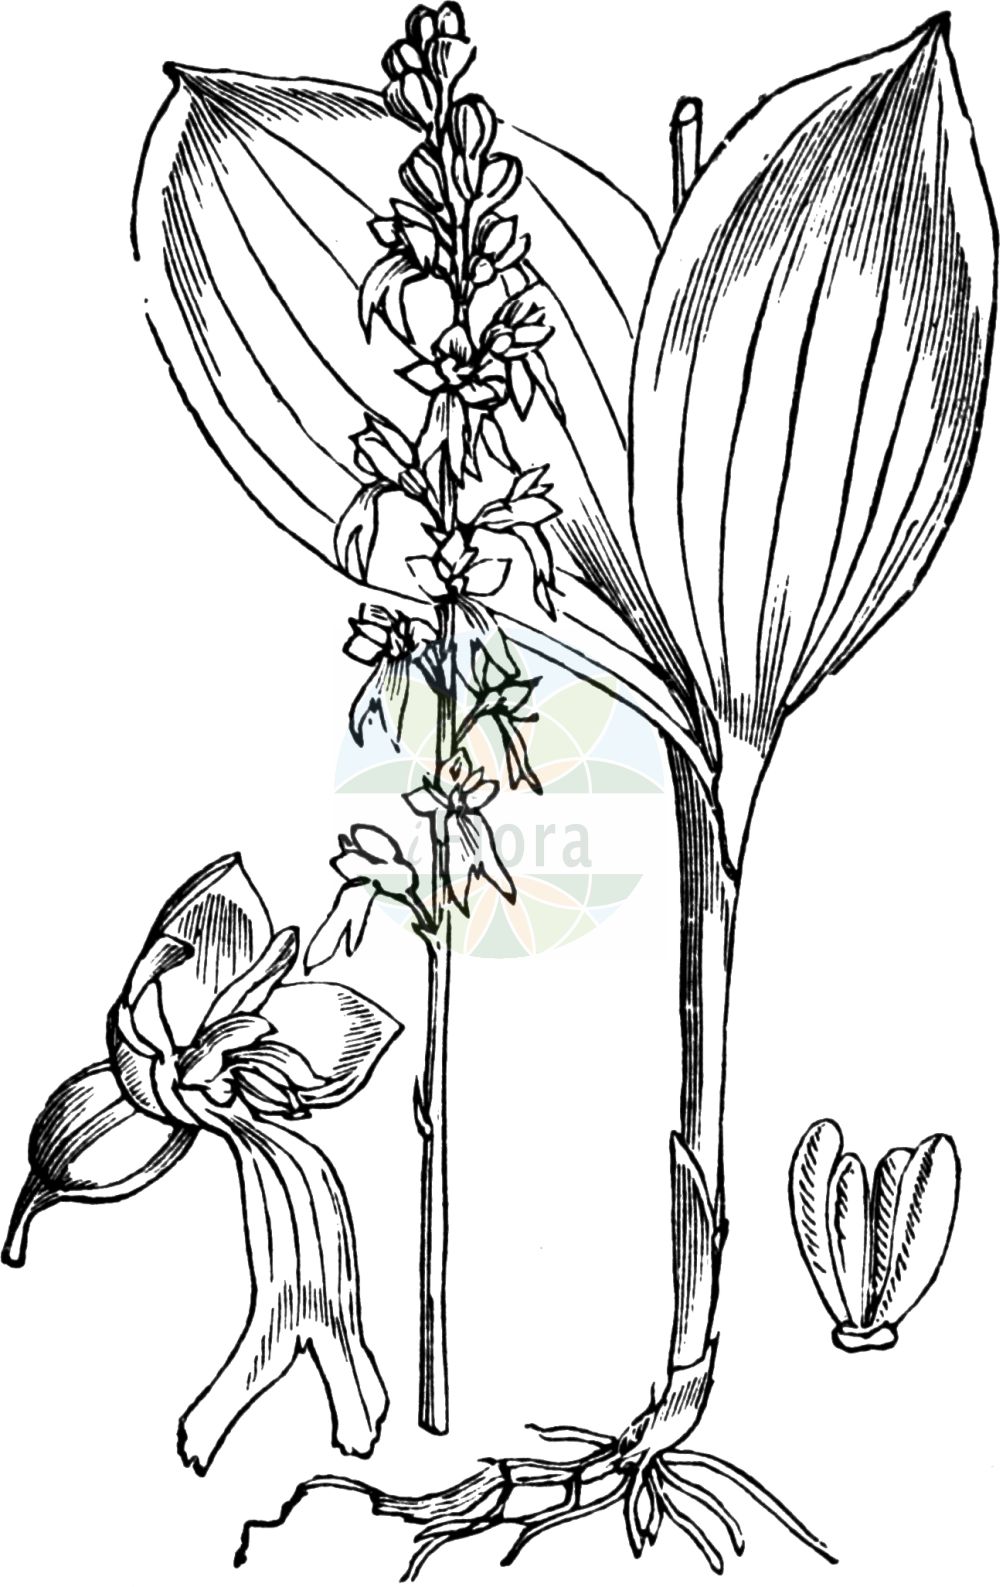 Historische Abbildung von Neottia ovata (Großes Zweiblatt - Common Twayblade). Das Bild zeigt Blatt, Bluete, Frucht und Same. ---- Historical Drawing of Neottia ovata (Großes Zweiblatt - Common Twayblade). The image is showing leaf, flower, fruit and seed.(Neottia ovata,Großes Zweiblatt,Common Twayblade,Bifolium ovatum,Diphryllum ovatum,Distomaea ovata,Epipactis ovalifolia,Epipactis ovata,Helleborine ovata,Listera multinervia,Listera ovata,Malaxis ovata,Neottia latifolia,Neottia ovata,Ophrys bifolia,Ophrys ovata,Pollinirhiza ovata,Serapias ovata,Grosses Zweiblatt,Common Twayblade,Eggleaf Twayblade,Twayblade,Neottia,Nestwurz,Nest Orchid,Orchidaceae,Knabenkrautgewächse,Orchid family,Blatt,Bluete,Frucht,Same,leaf,flower,fruit,seed,Fitch et al. (1880))